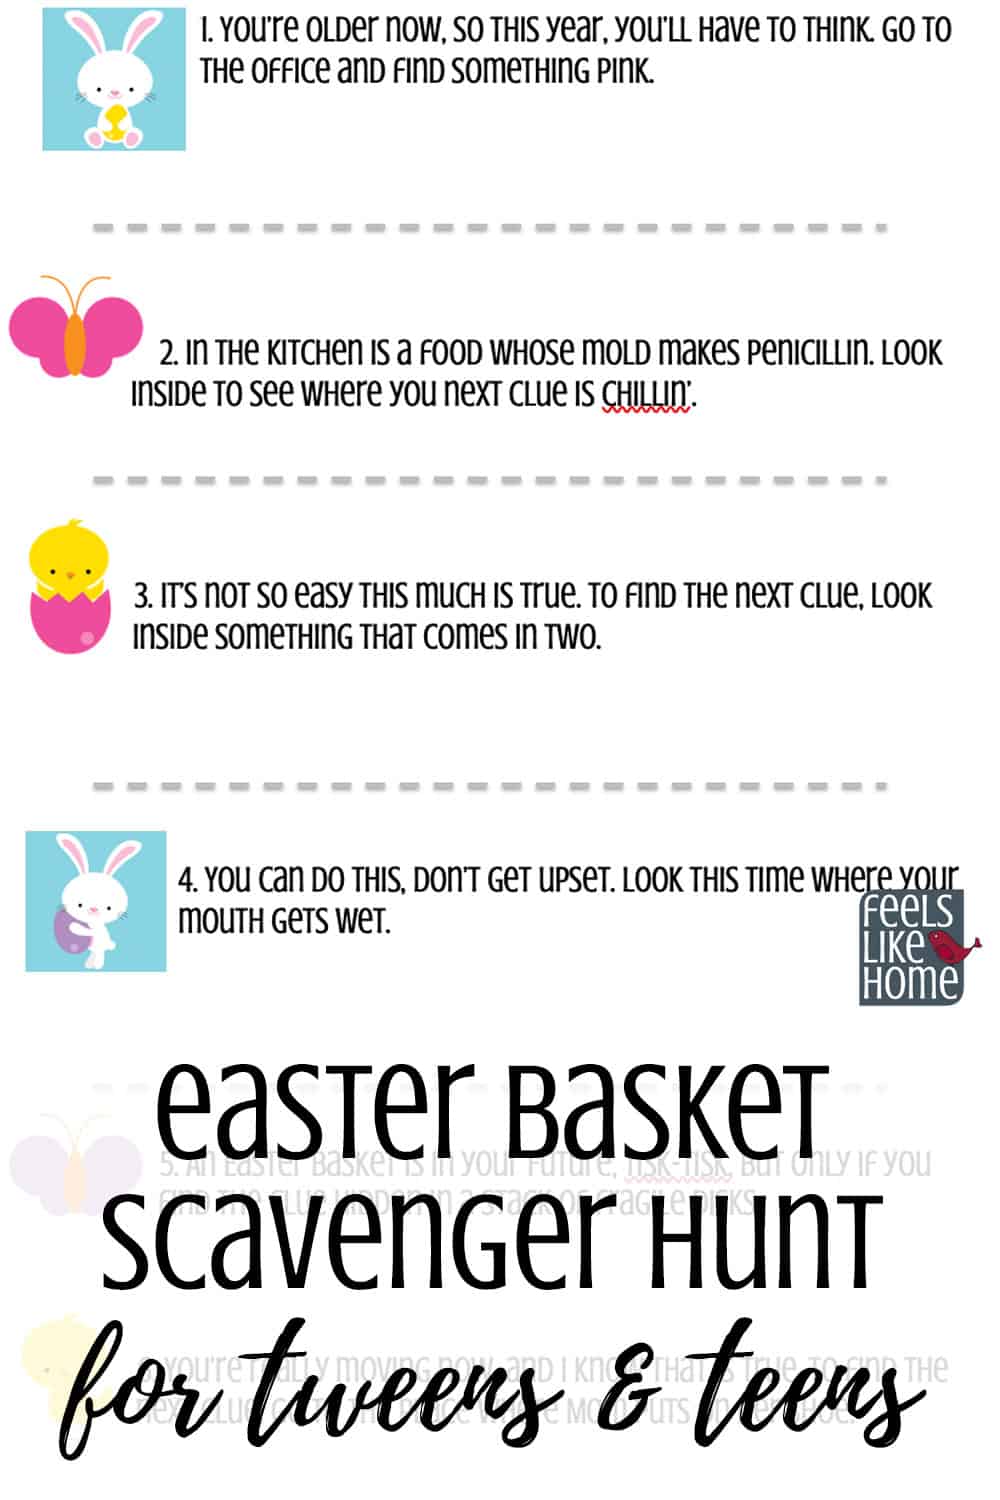 Challenging Easter Basket Scavenger Hunt for Tweens & Teens (Not Relig